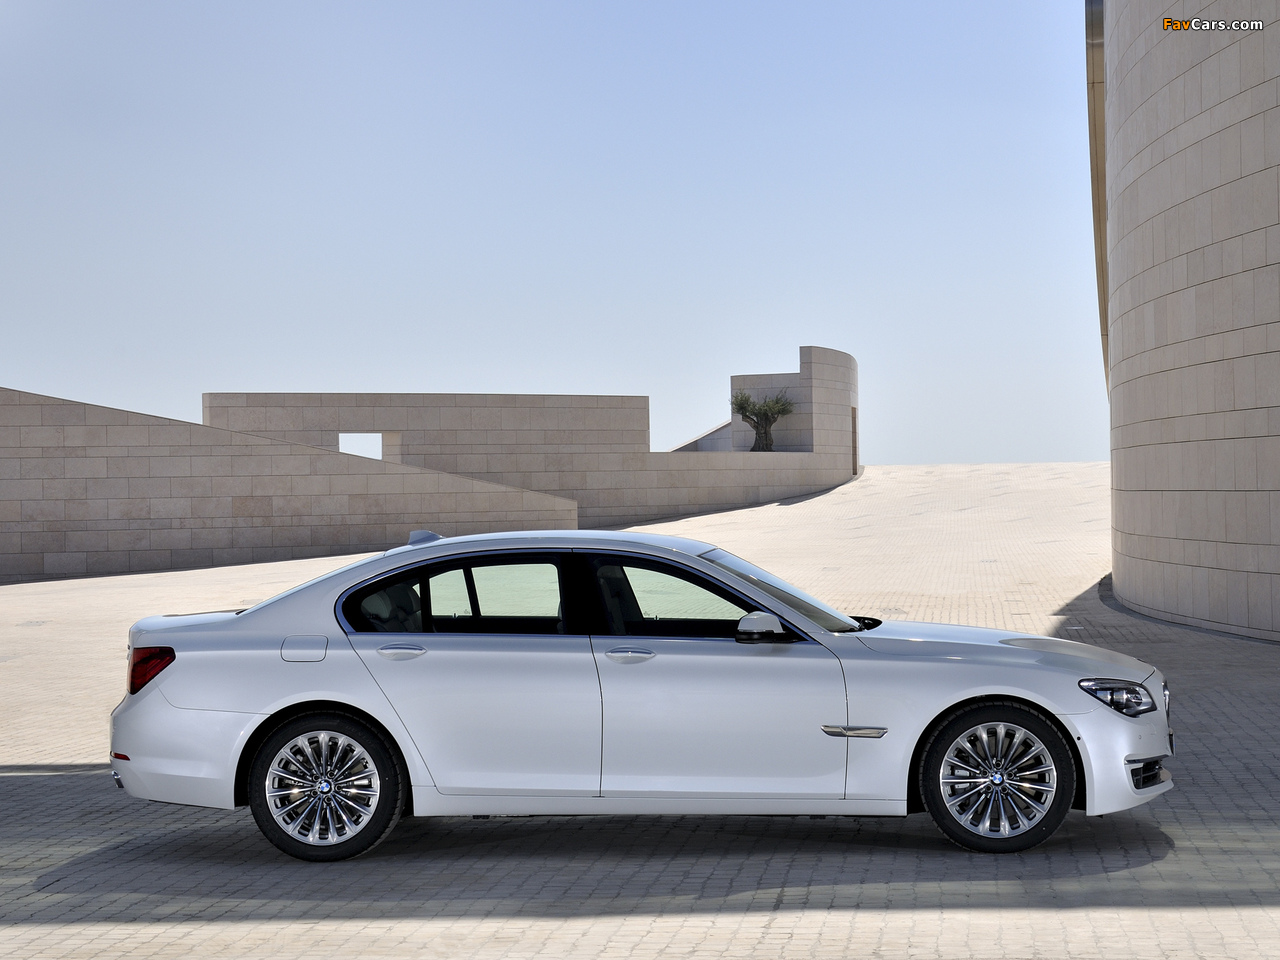 BMW 750d xDrive (F01) 2012 images (1280 x 960)